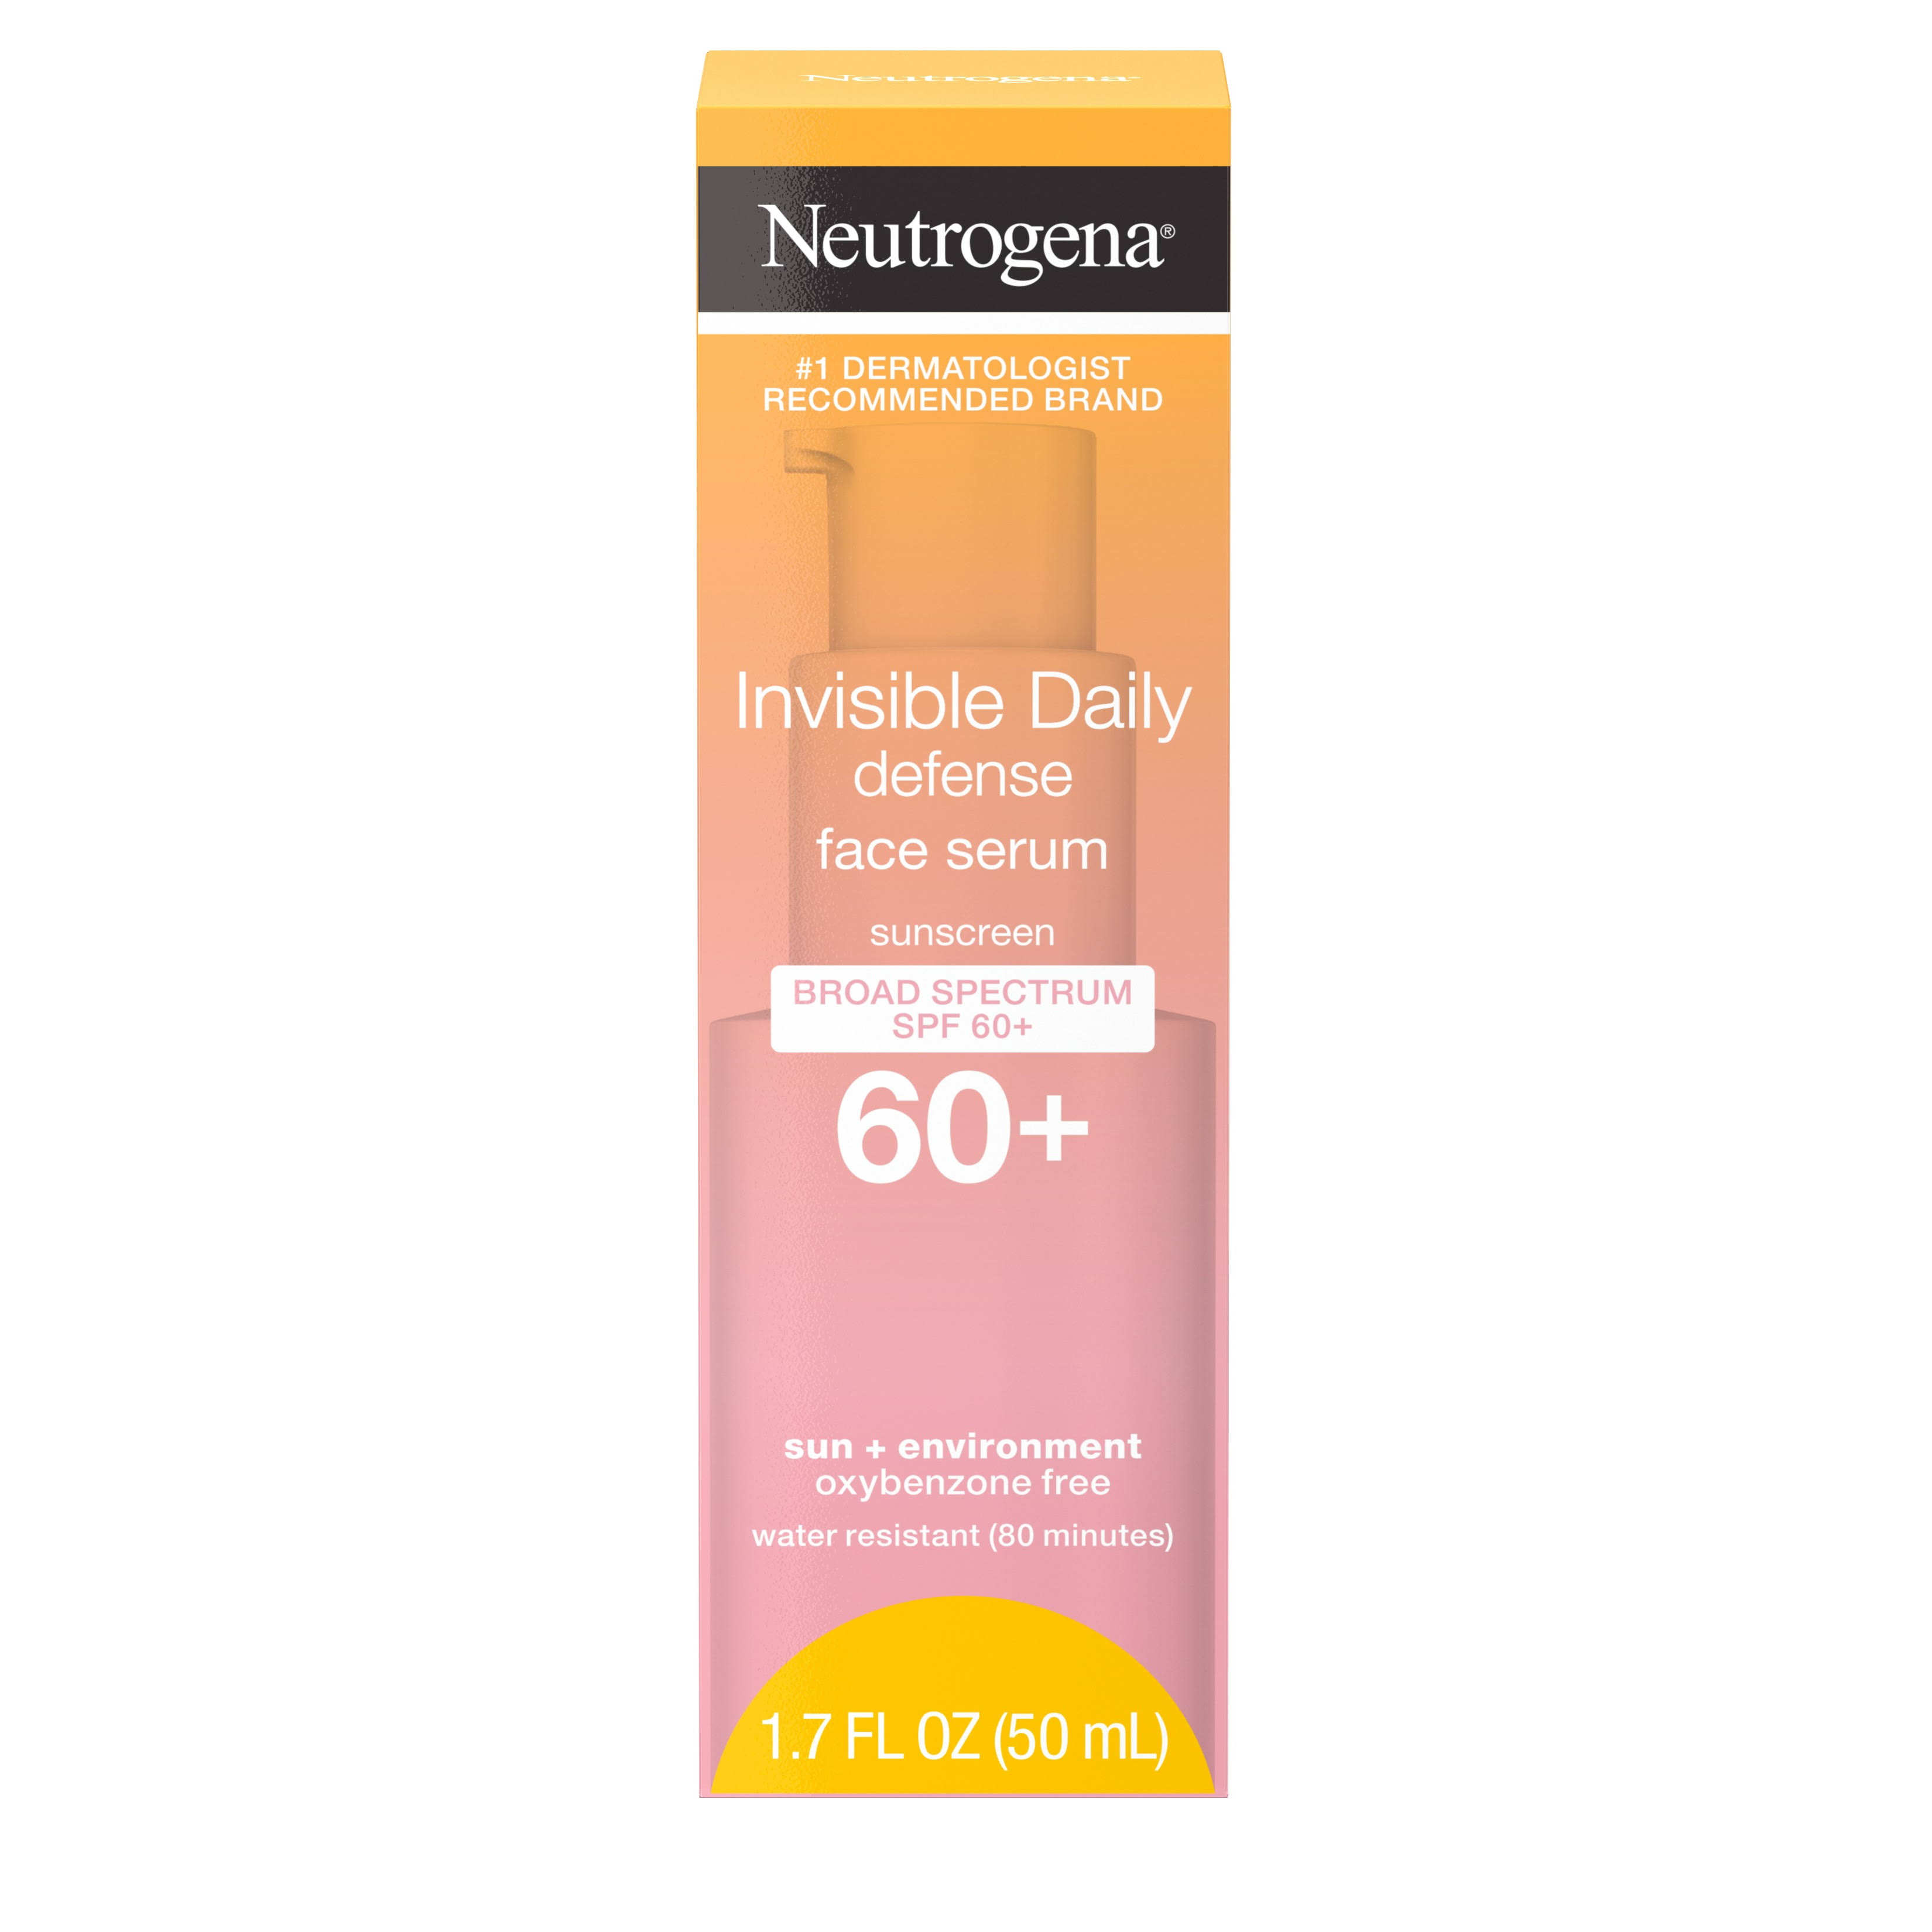 Neutrogena Invisible Daily Defense Sunscreen Face Serum SPF 60+ 1.7 fl oz (50 ml)